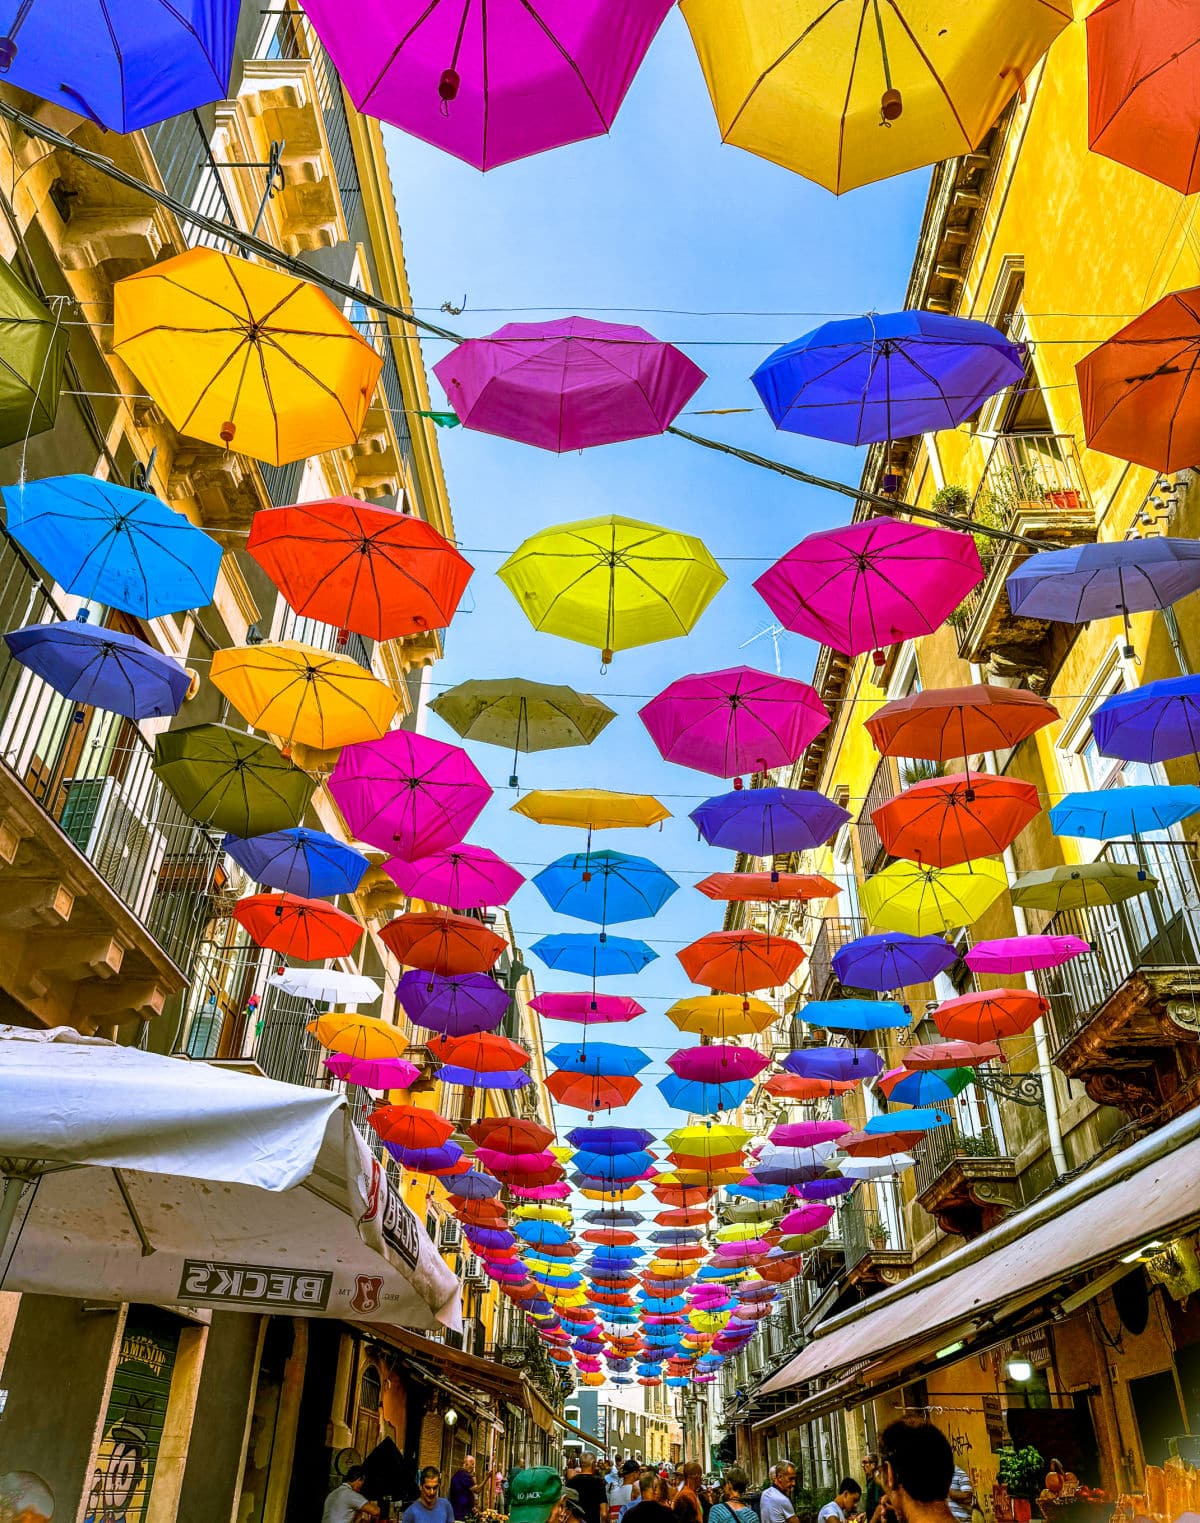 Colorful umbrellas over a market.